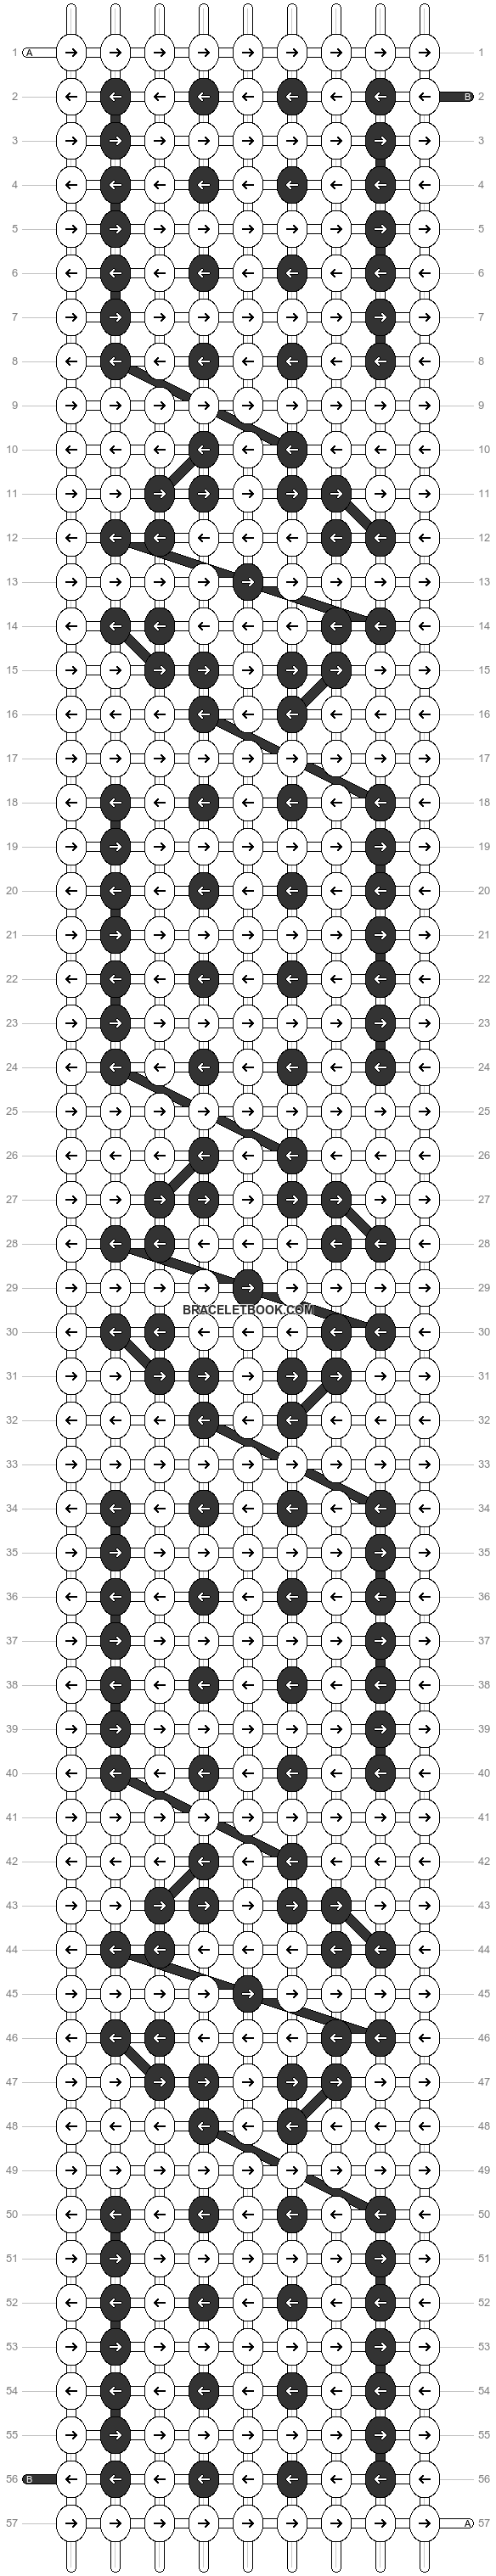 Alpha pattern #26143 pattern